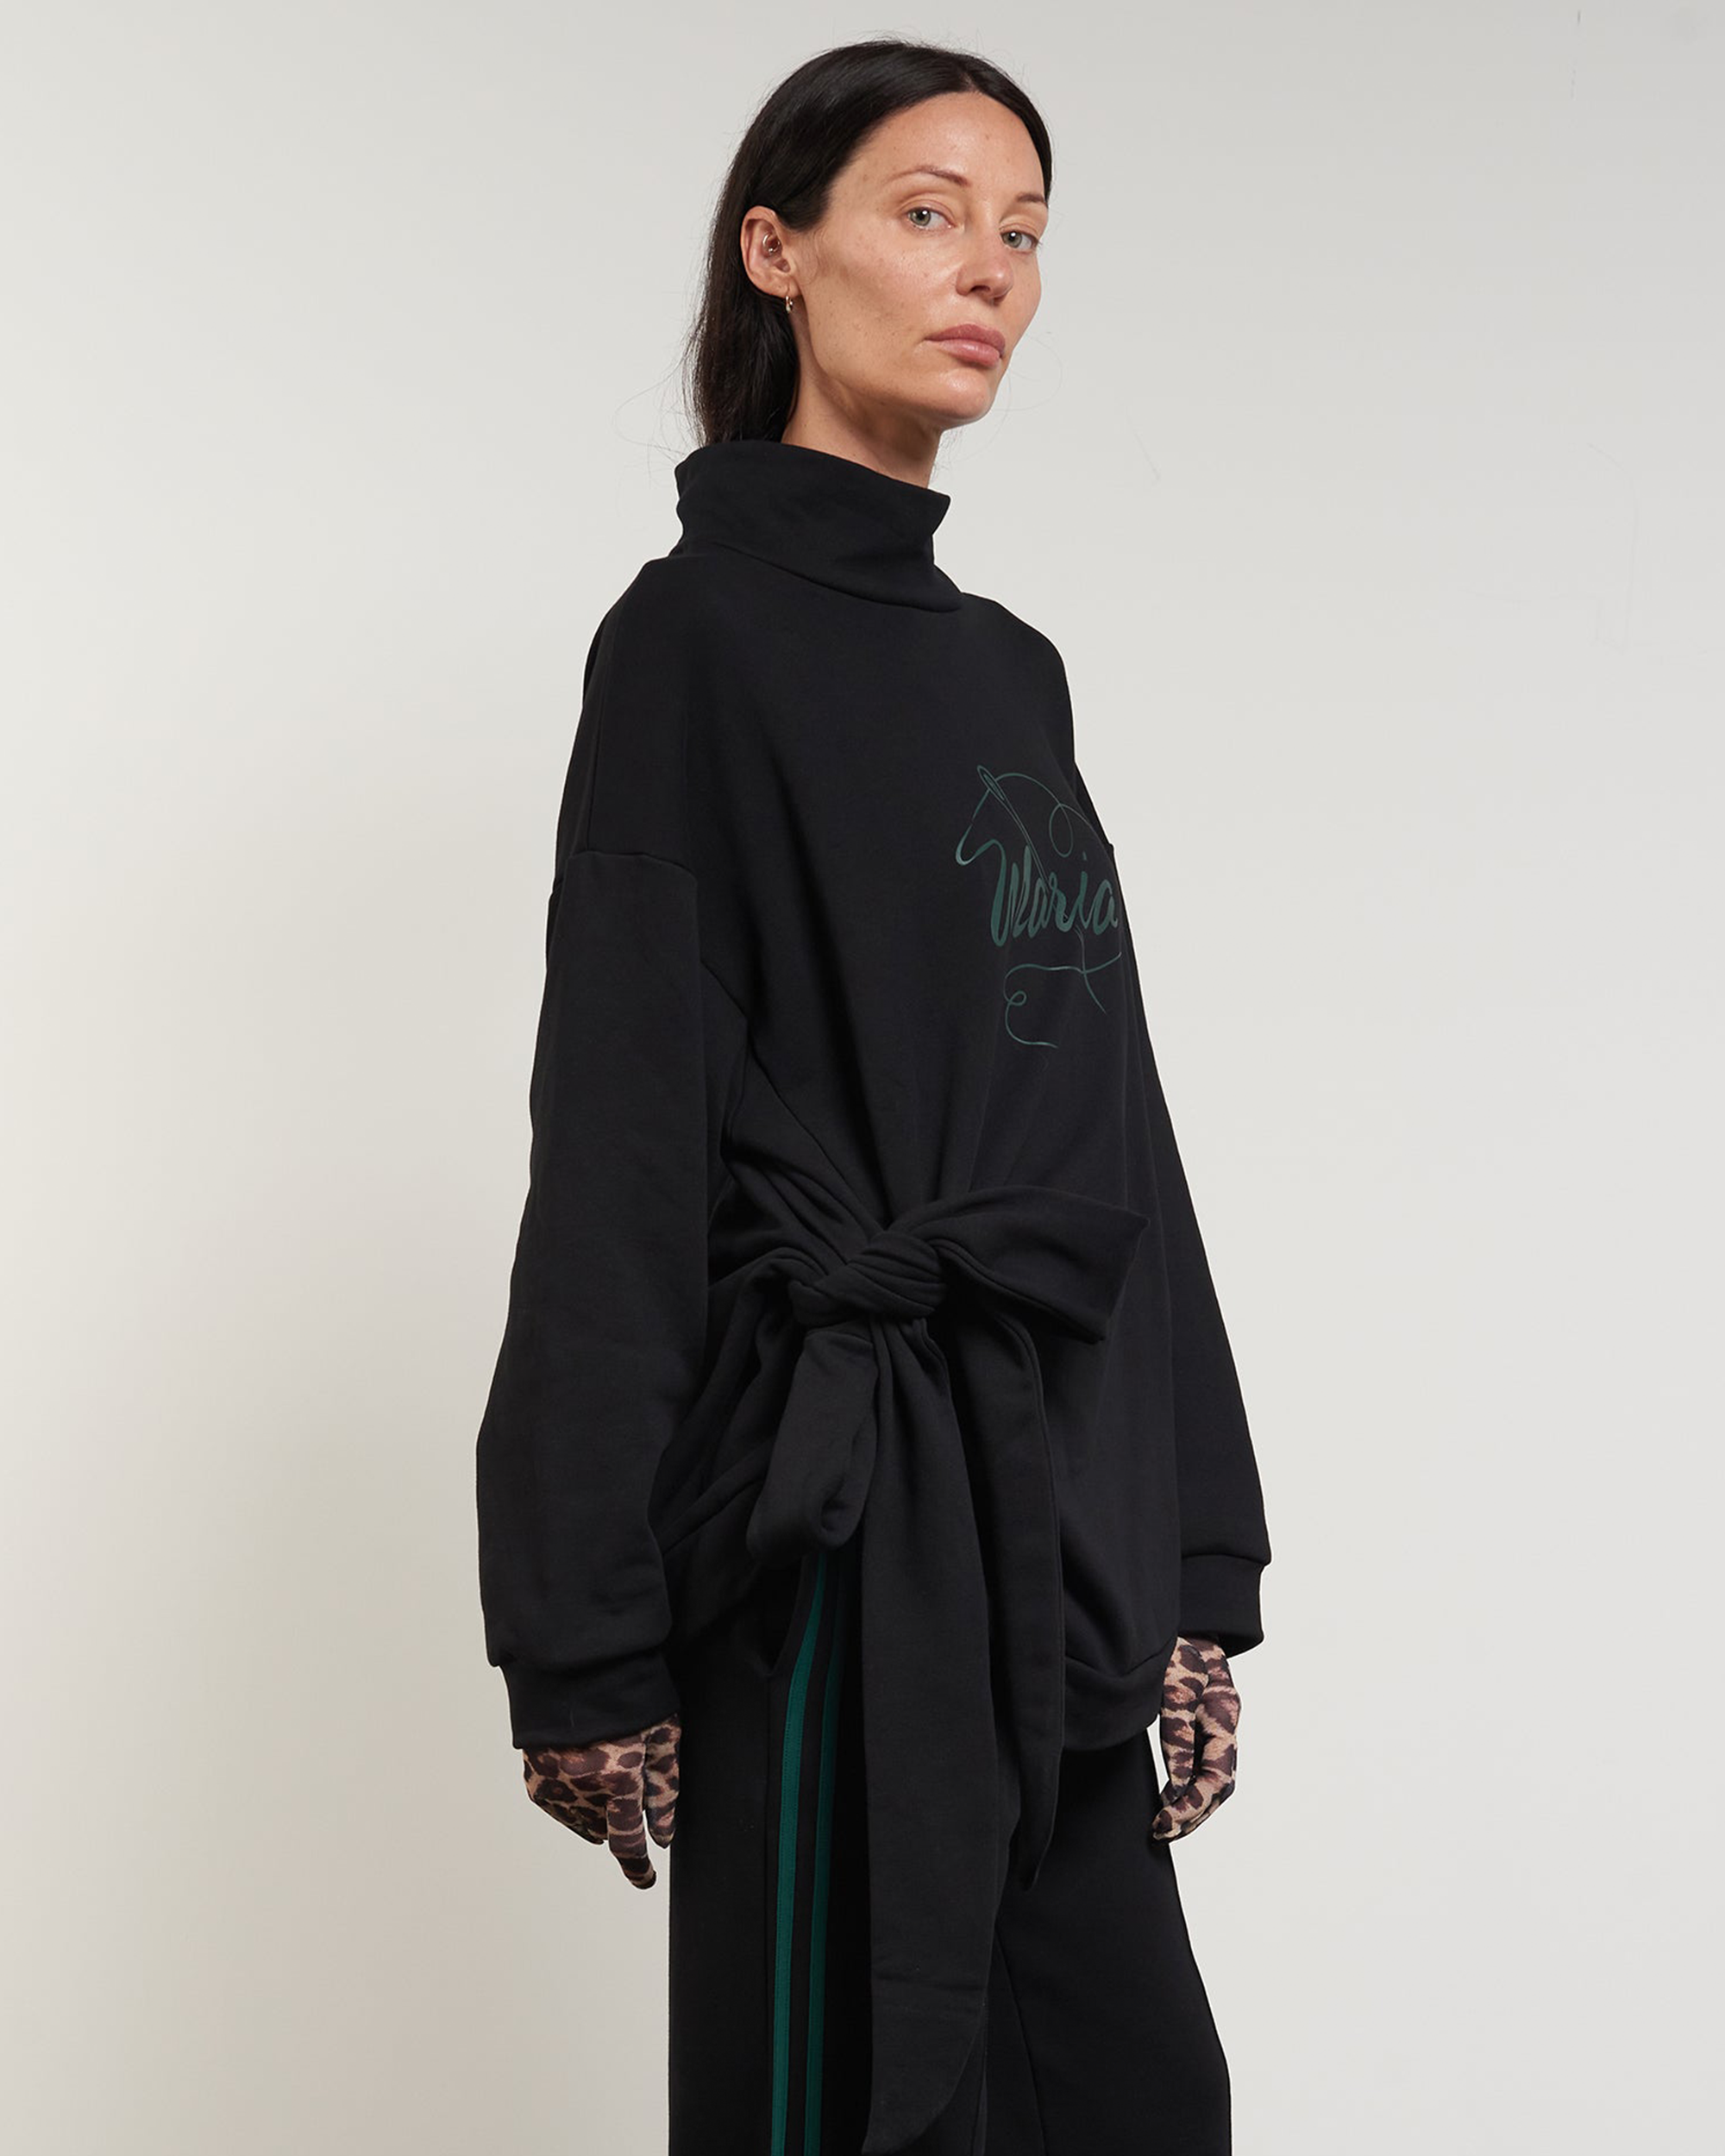 Maria Bow Sweater - Black / Green